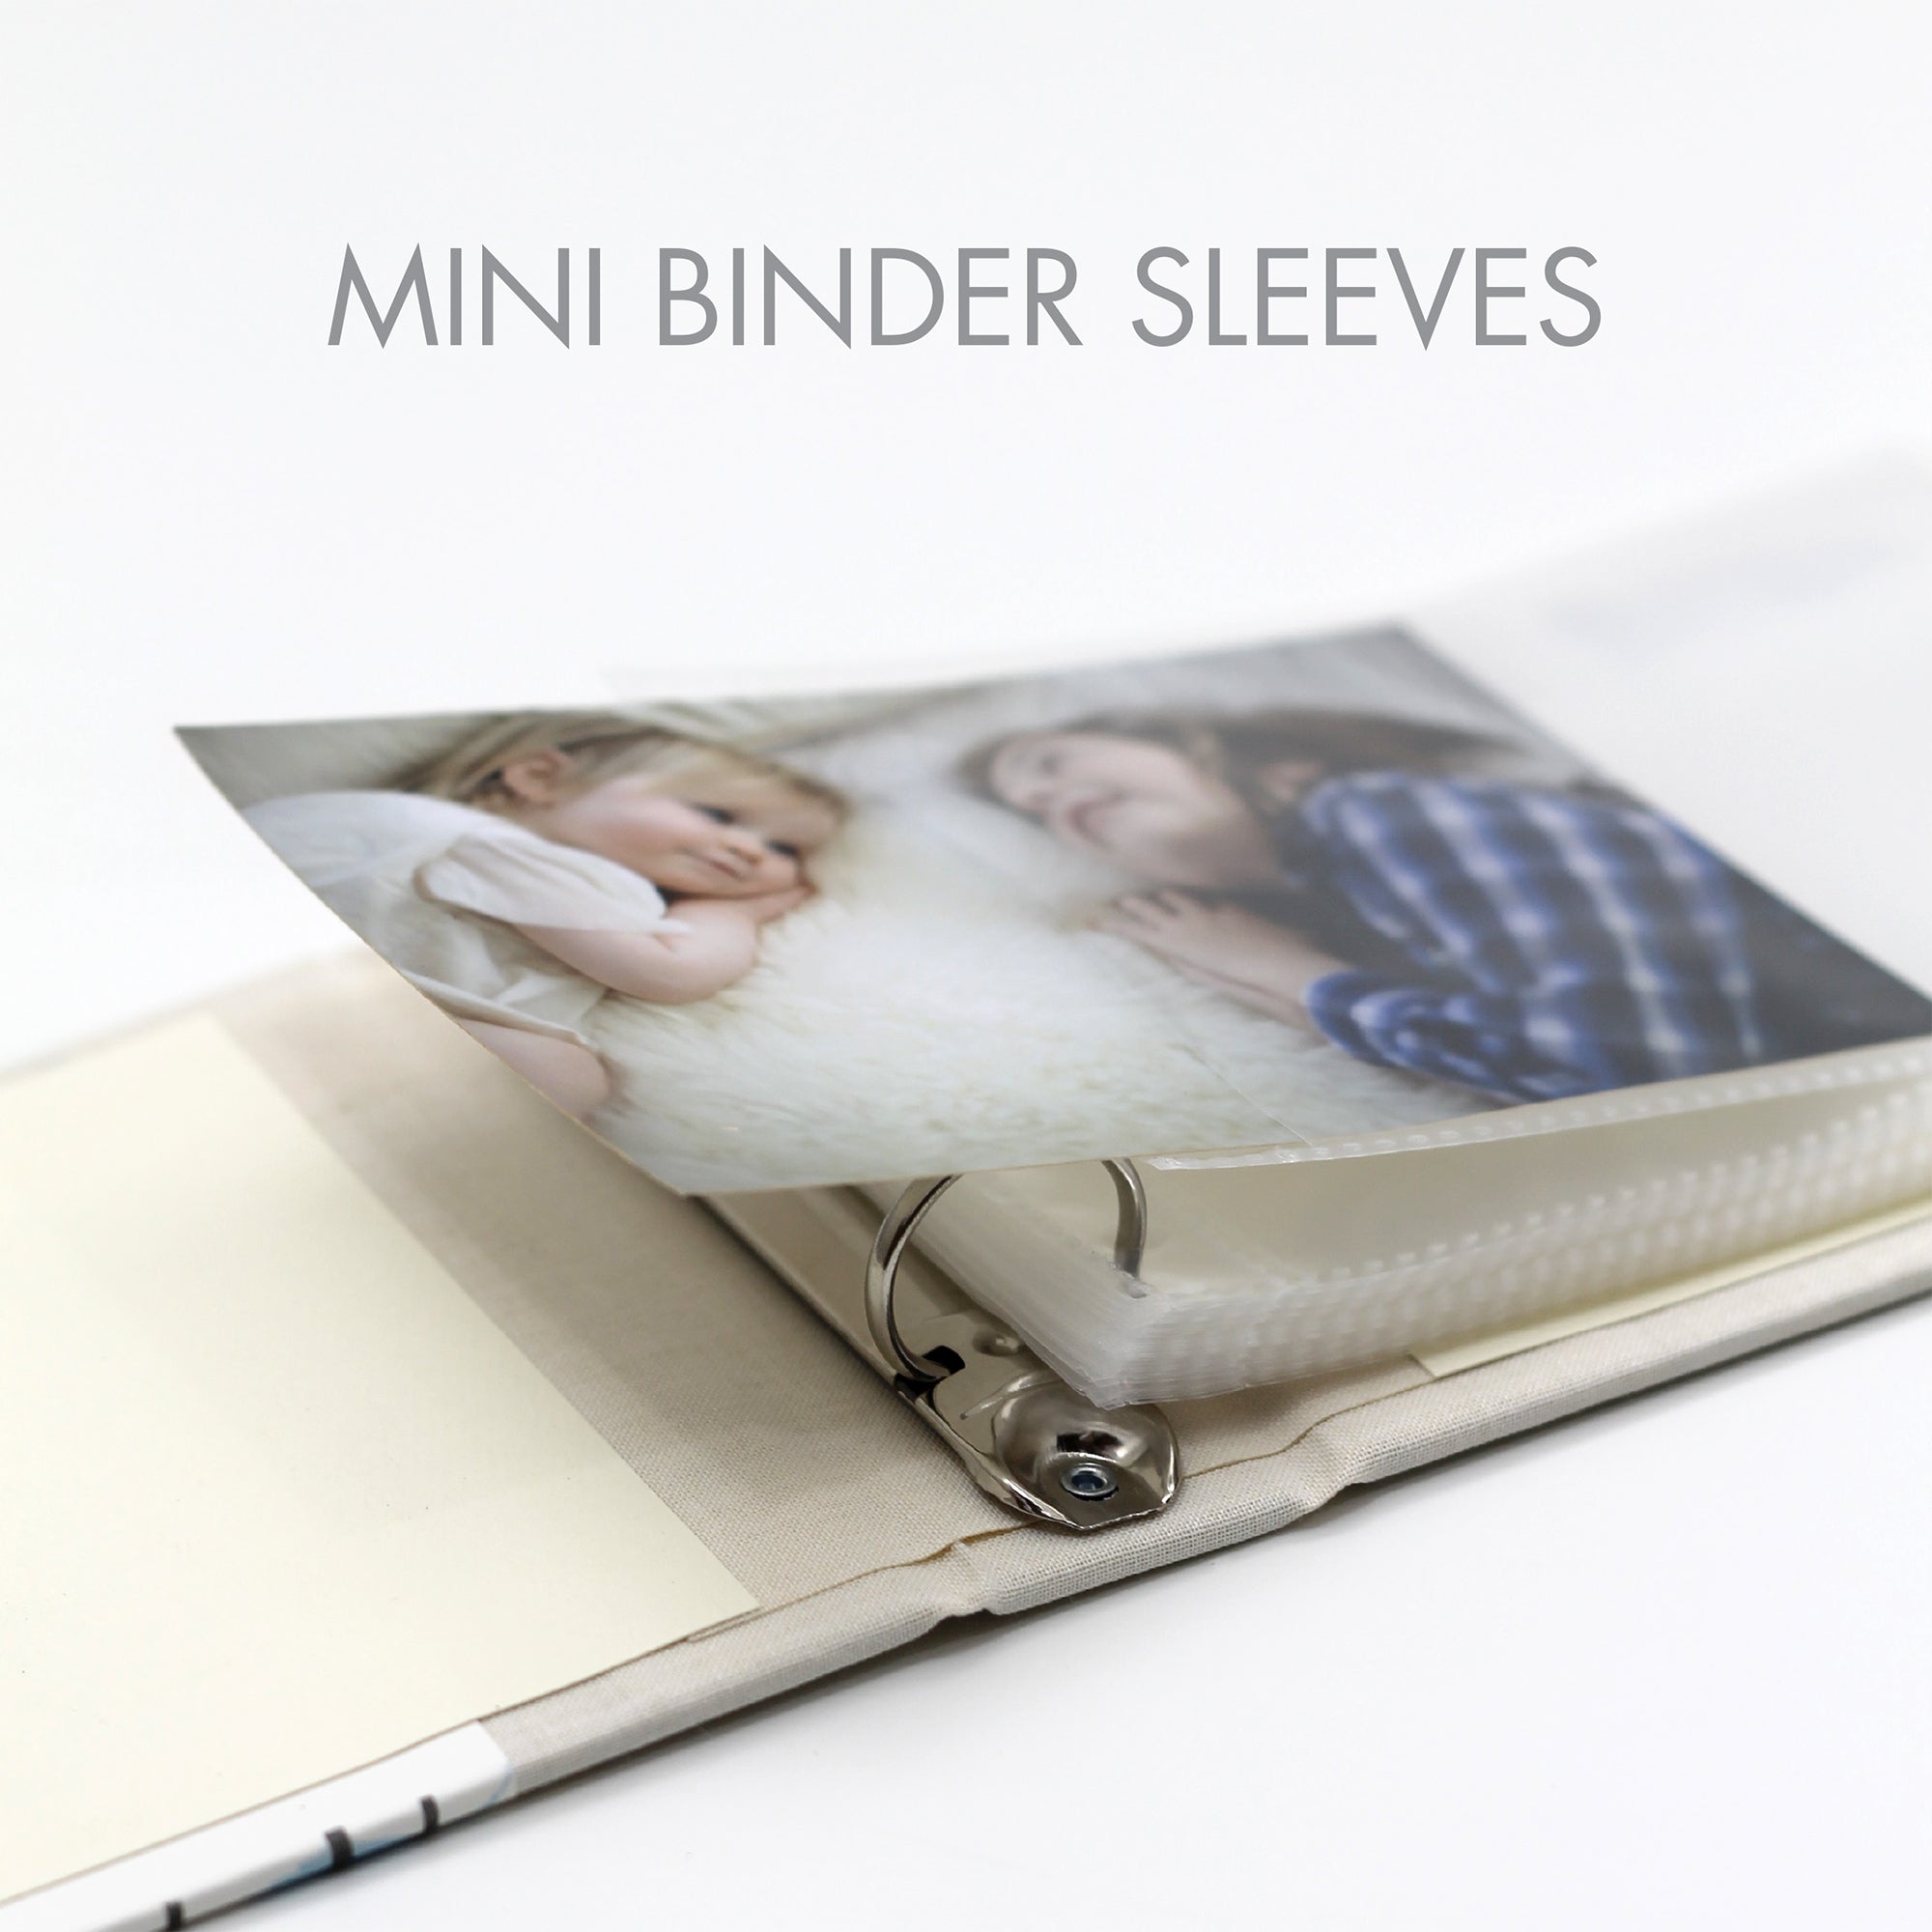  Mini Binder Sleeves - New